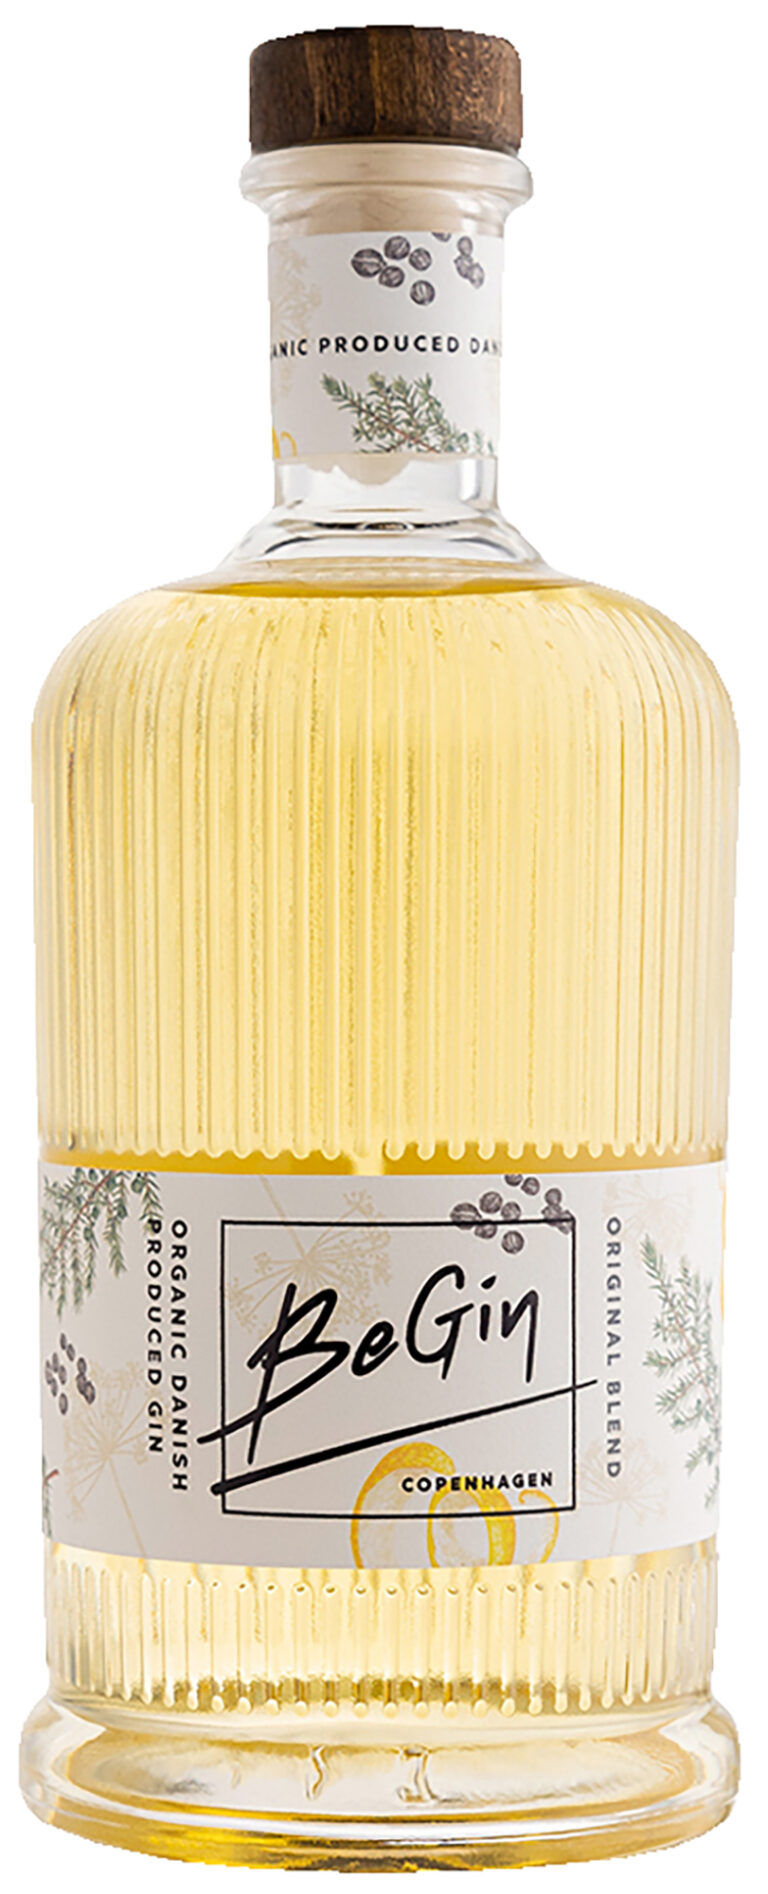 Se Gin - BEGIN ORIGINAL GIN 40% ØKO 50 cl. hos Falkensten Vin